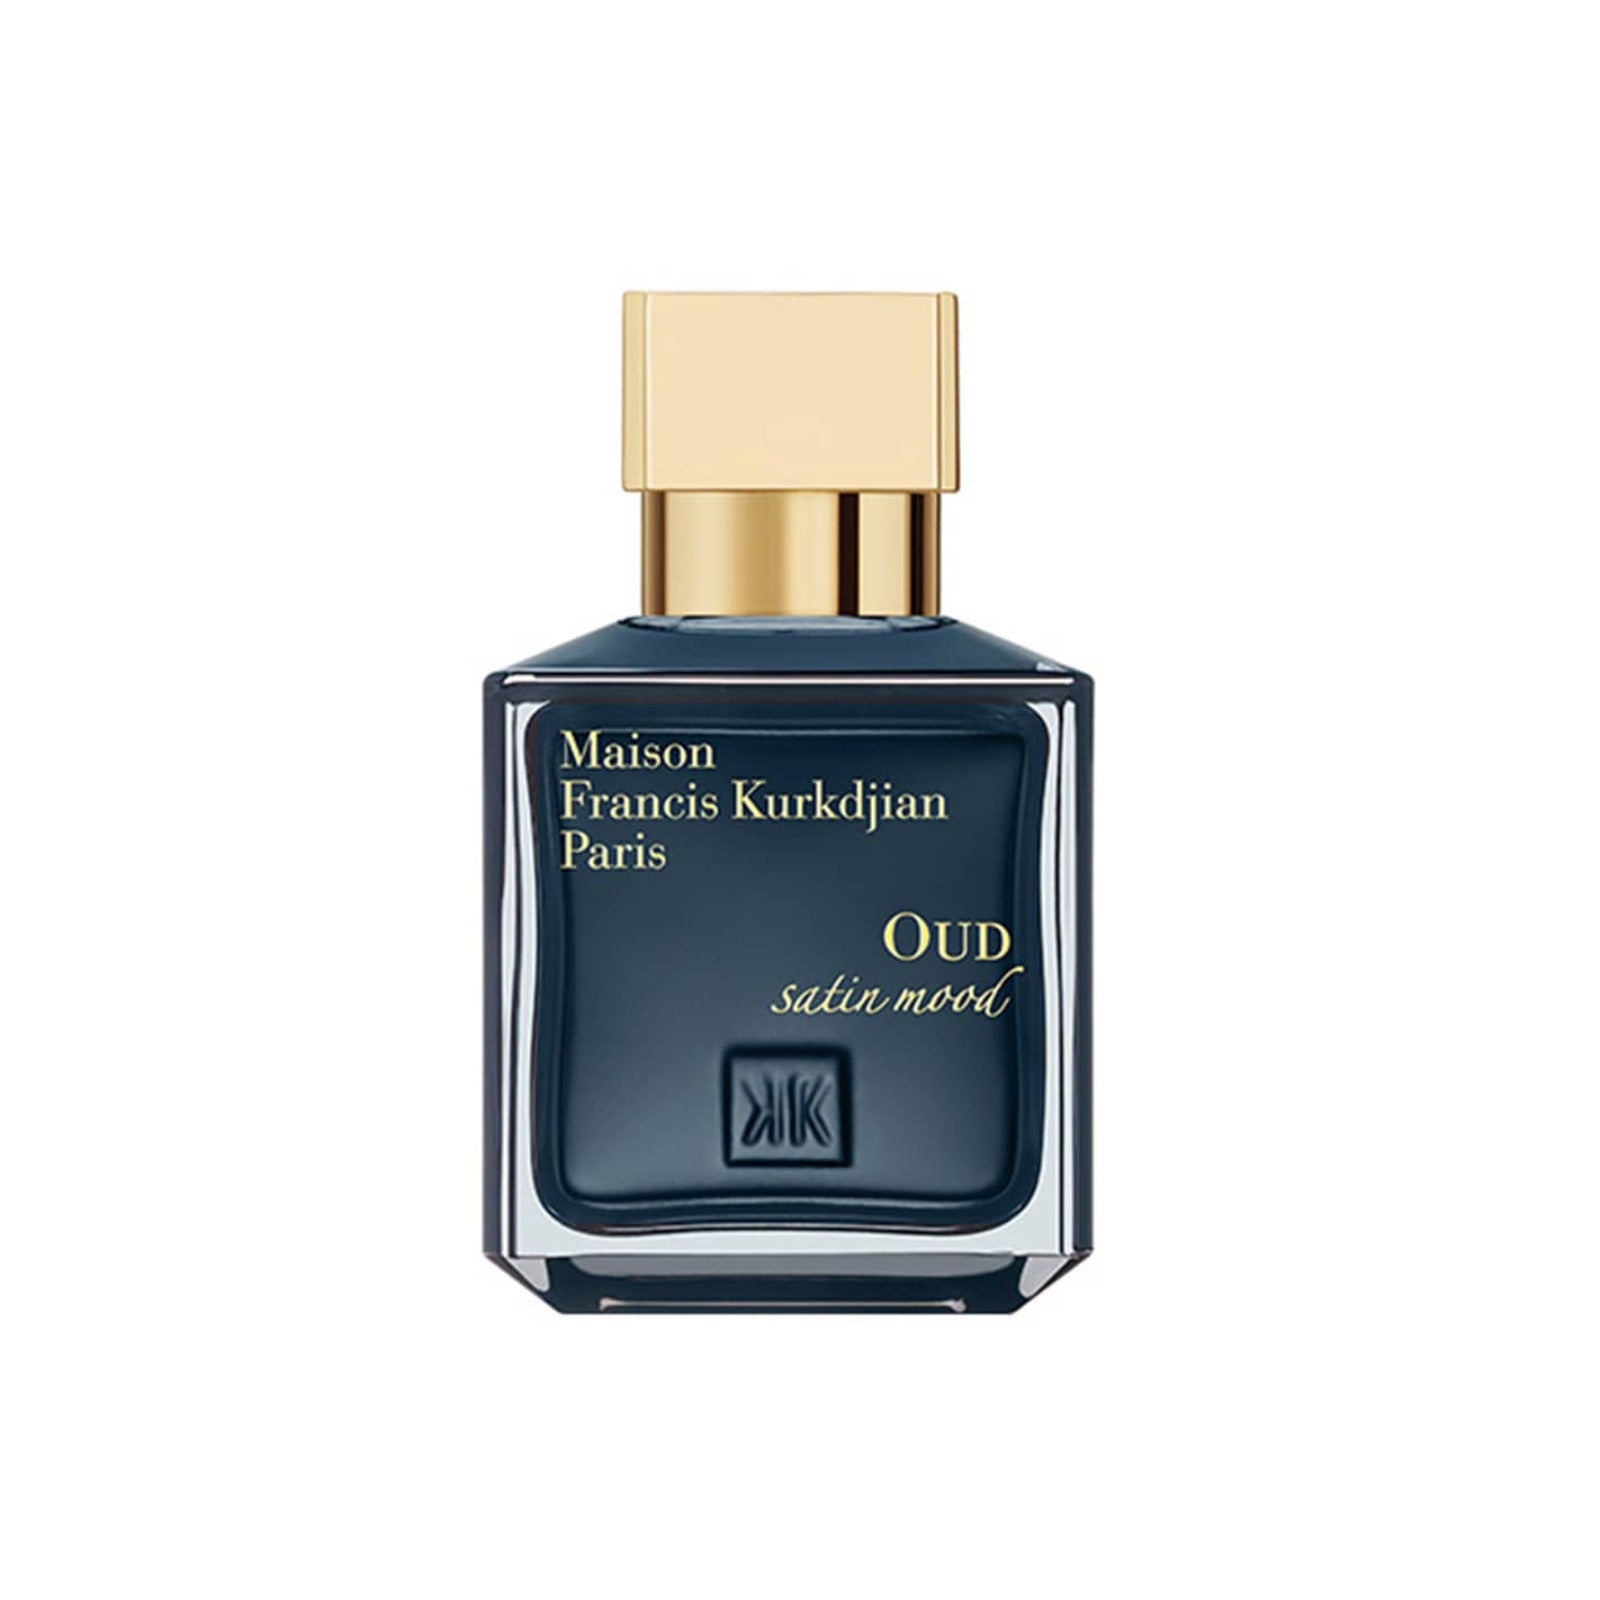 MAISON FRANCIS KURKDJIAN - OUD Satin Mood extrait de parfum 70ml